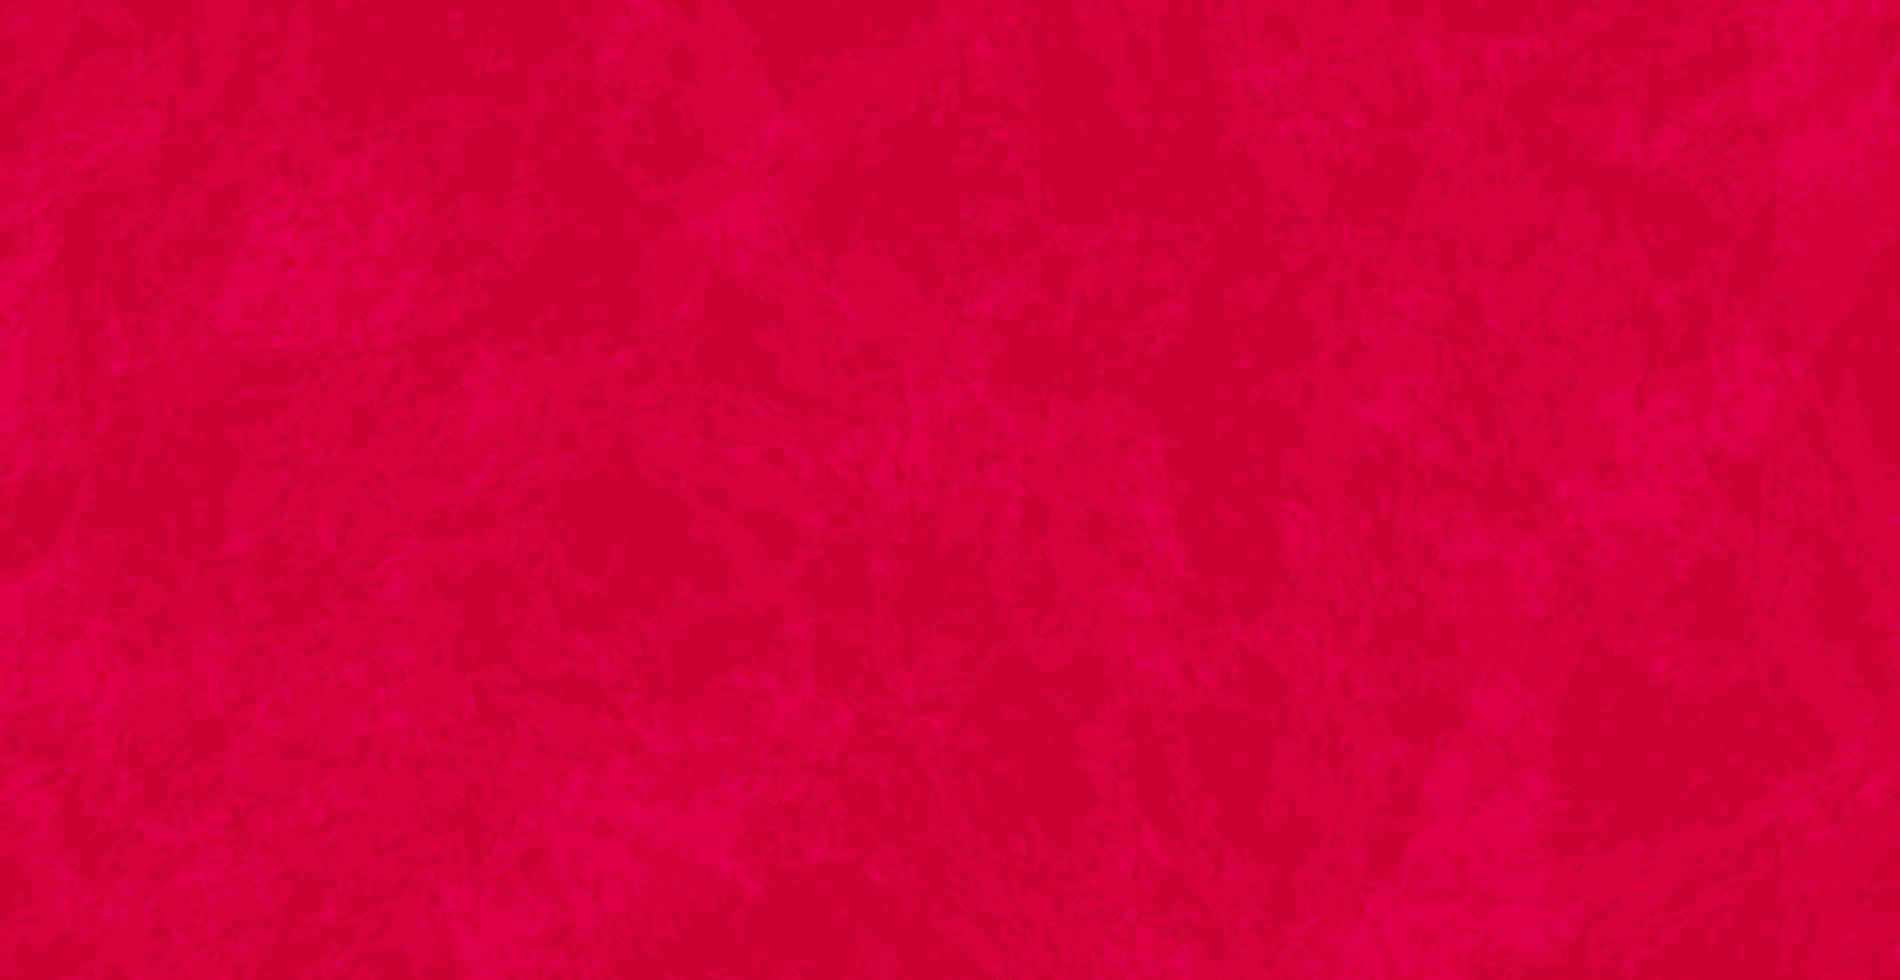 rode abstract getextureerde grunge webachtergrond - vector